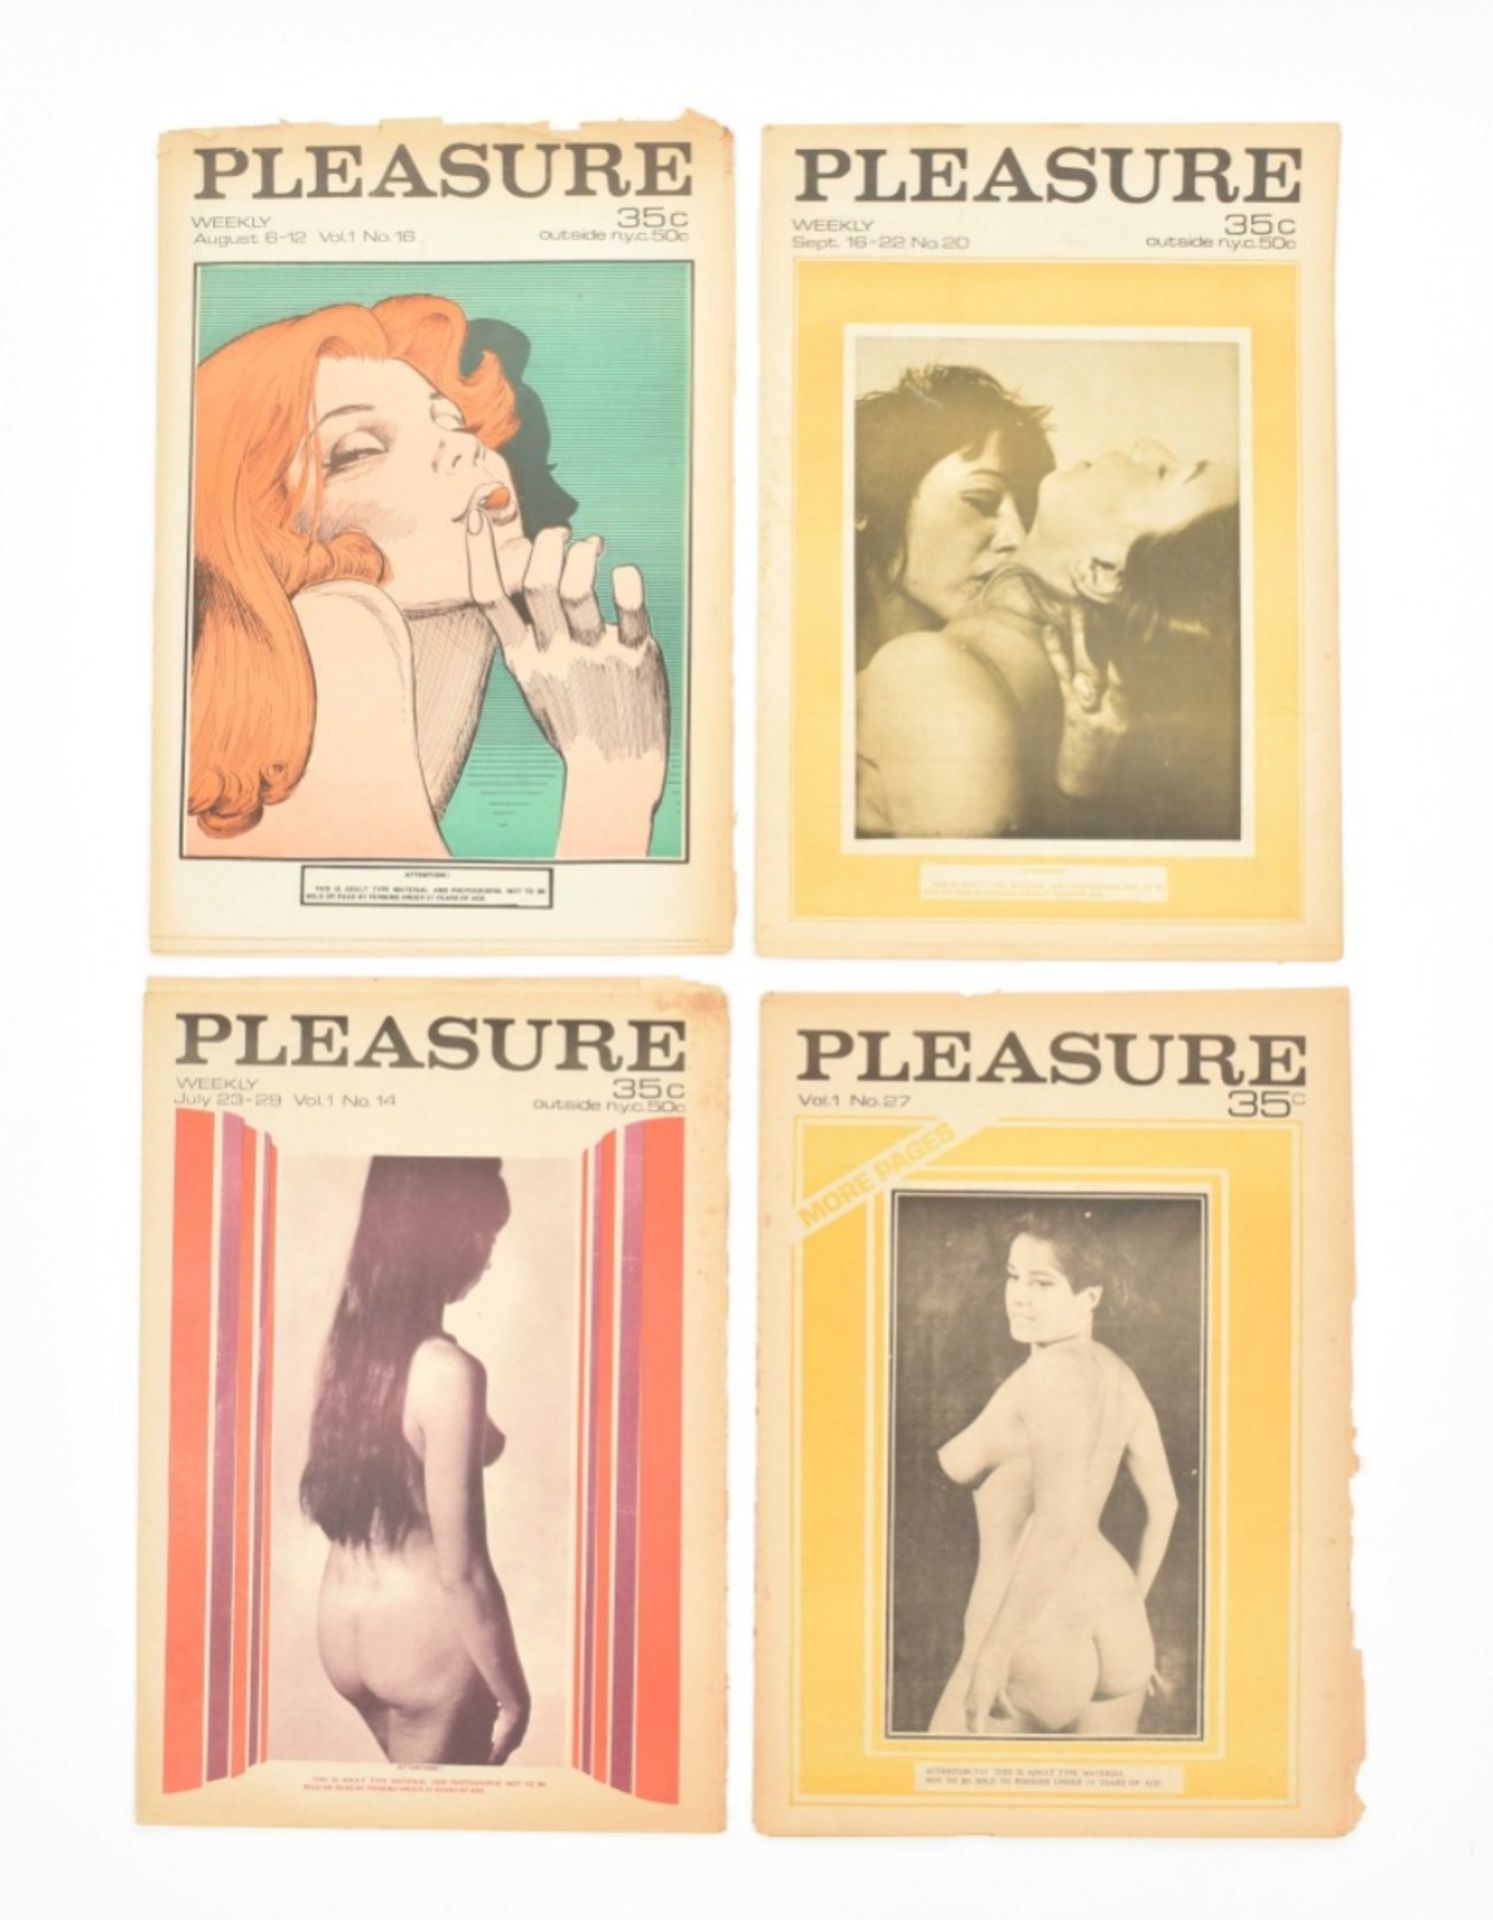 [Subculture] Pleasure - Image 8 of 8